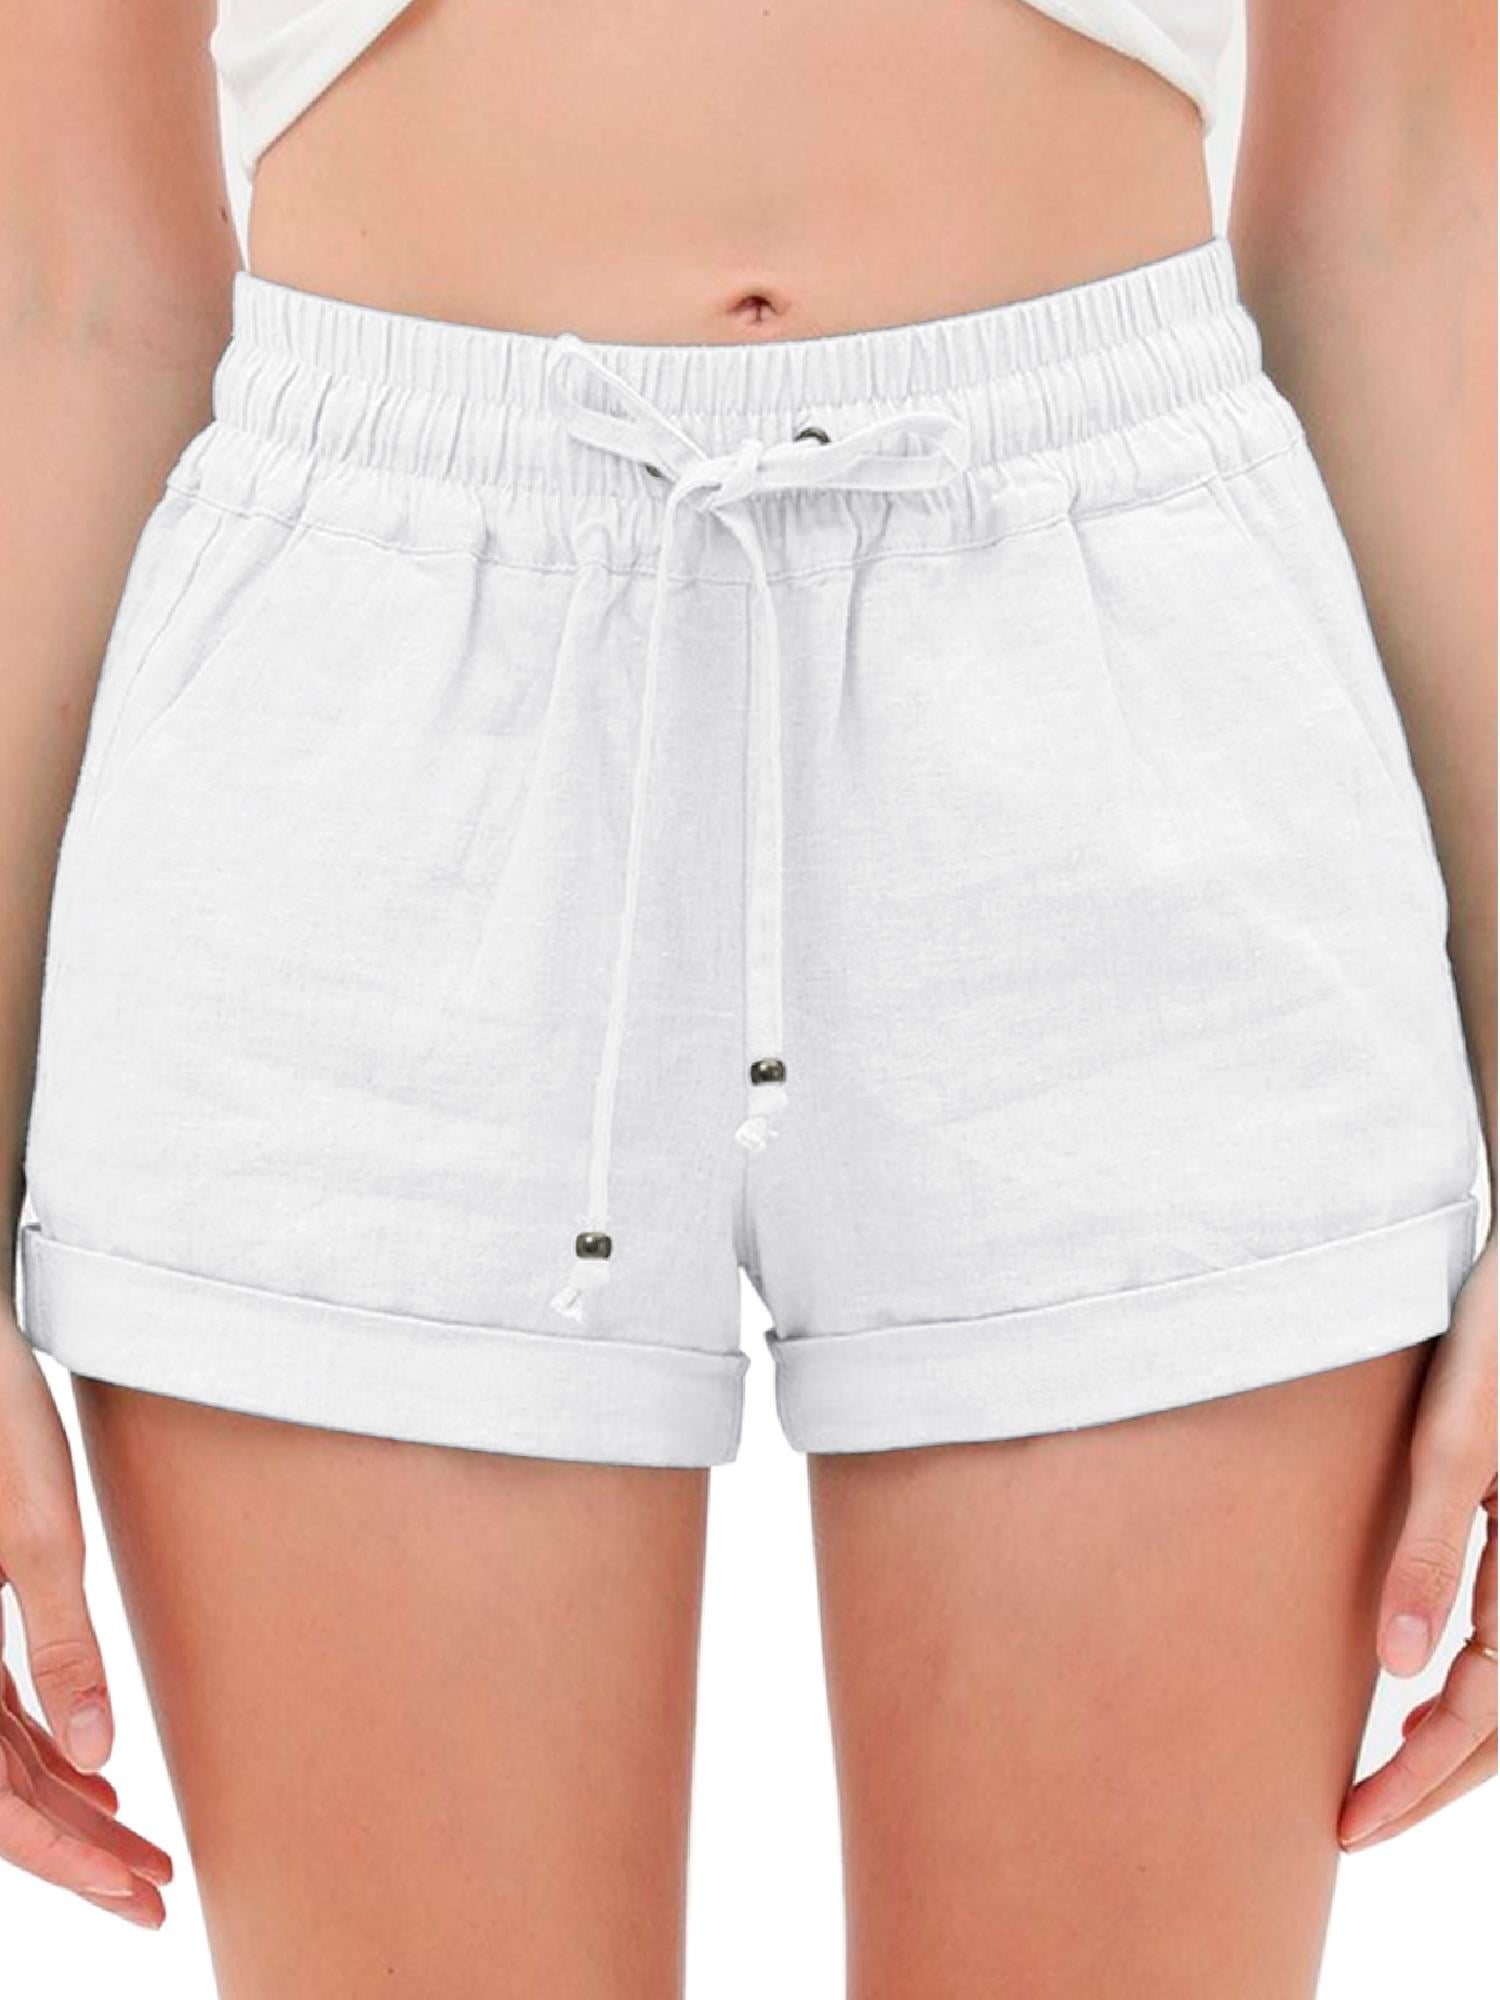 NDGDA Women Short Pants Casual Linen Cotton Elastic Drawstring Shorts Pants Trousers 